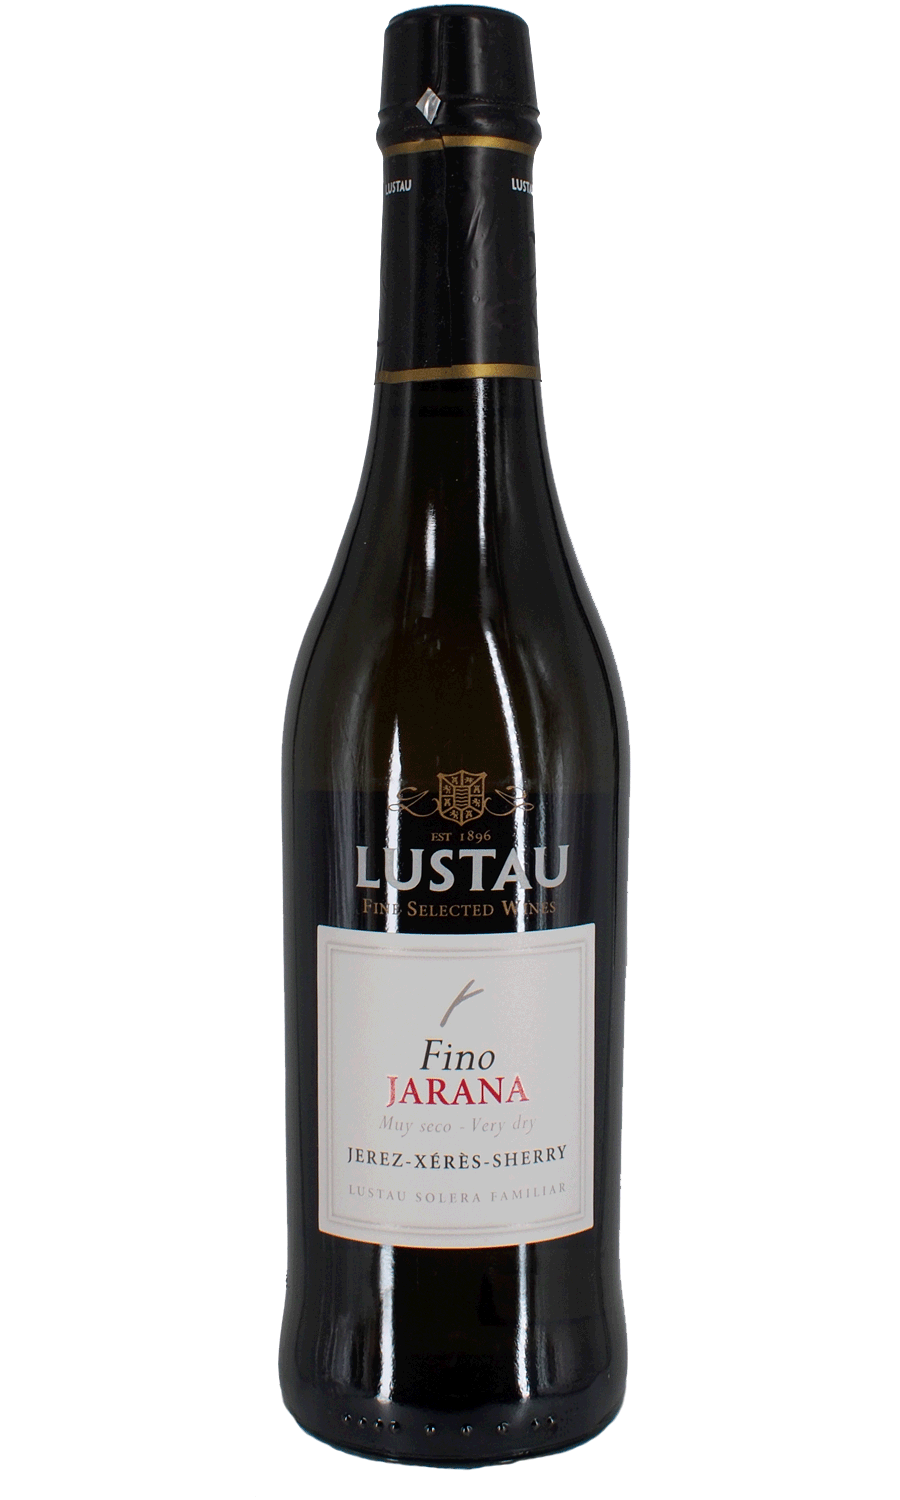 Lustau Sherry Fino Jarana 0,375 l